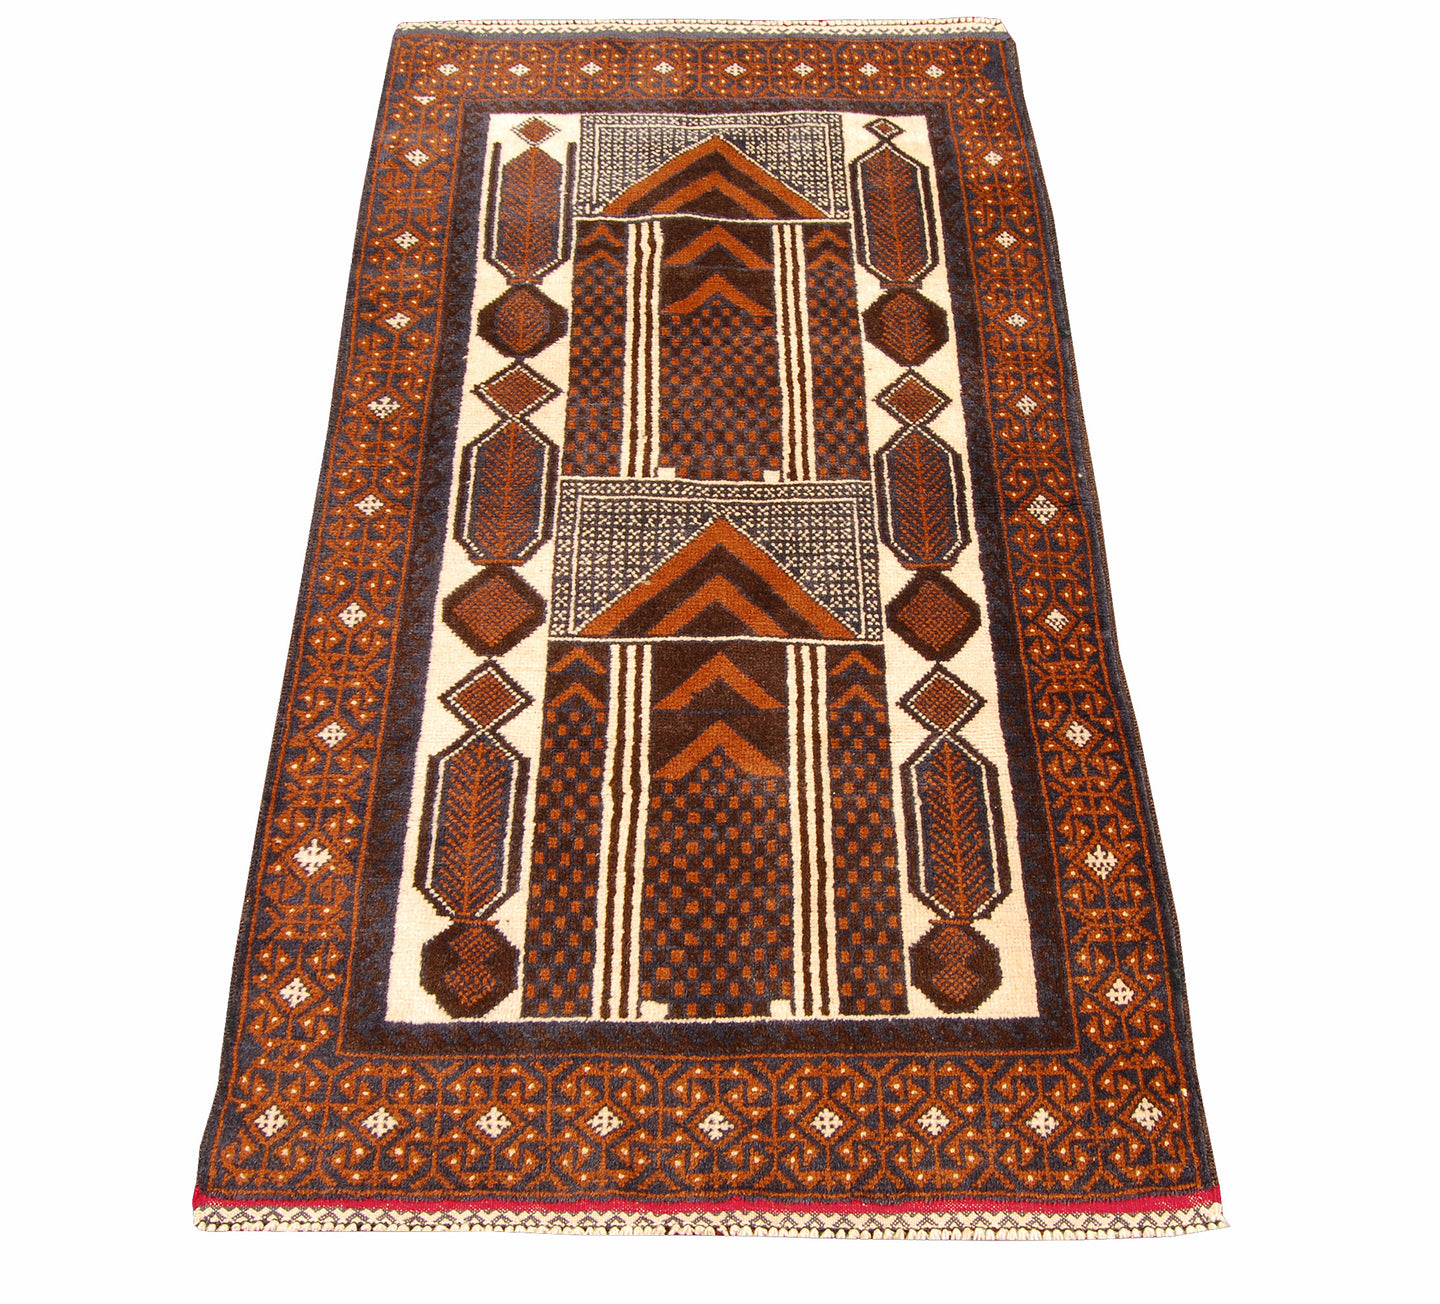 Genuine, Original Pure Wool Rug Rustic Handmad Carpet CM 150x82